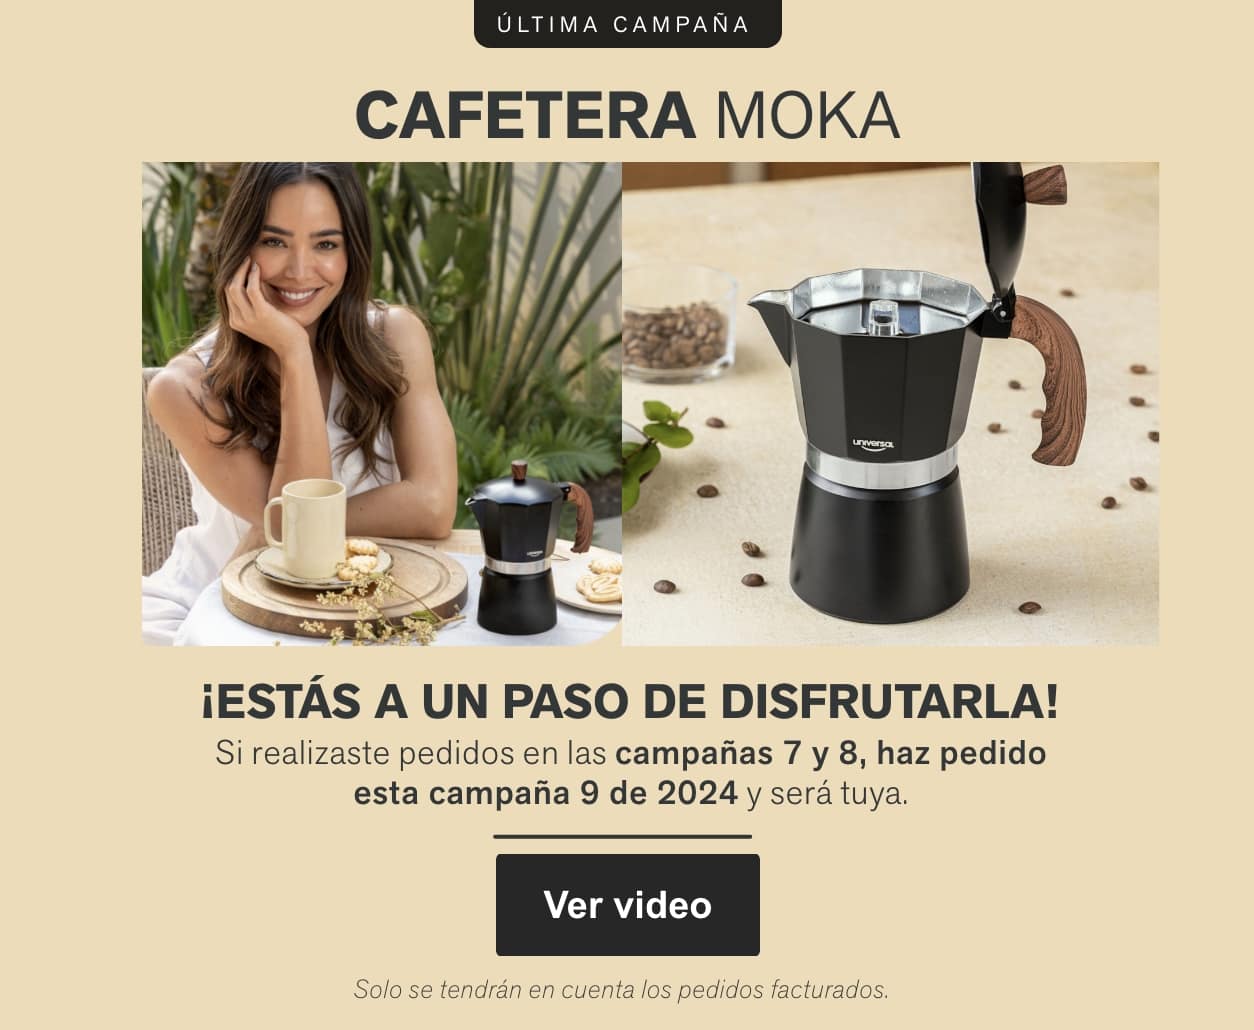 Cafetera Moka